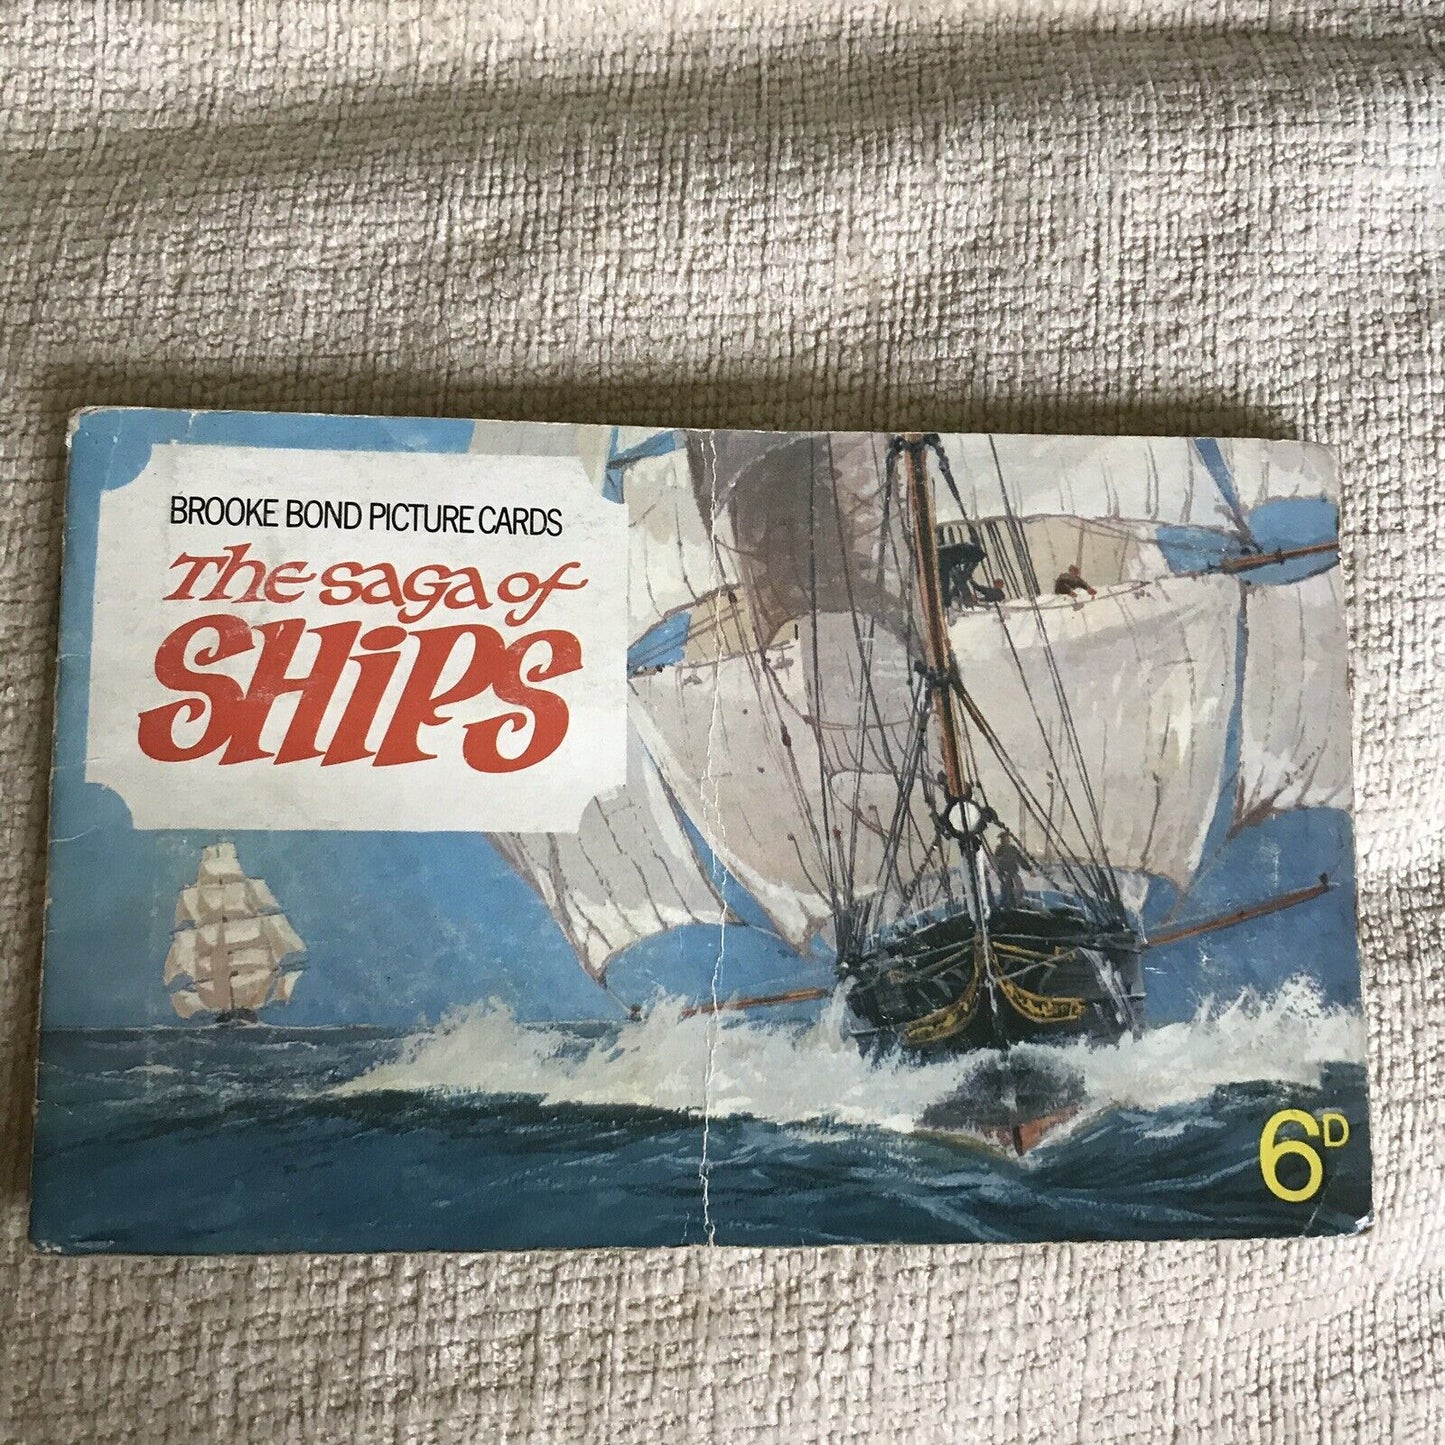 Brooke Bond Teacard The Saga Of Ships Komplettset aus den 1960er Jahren